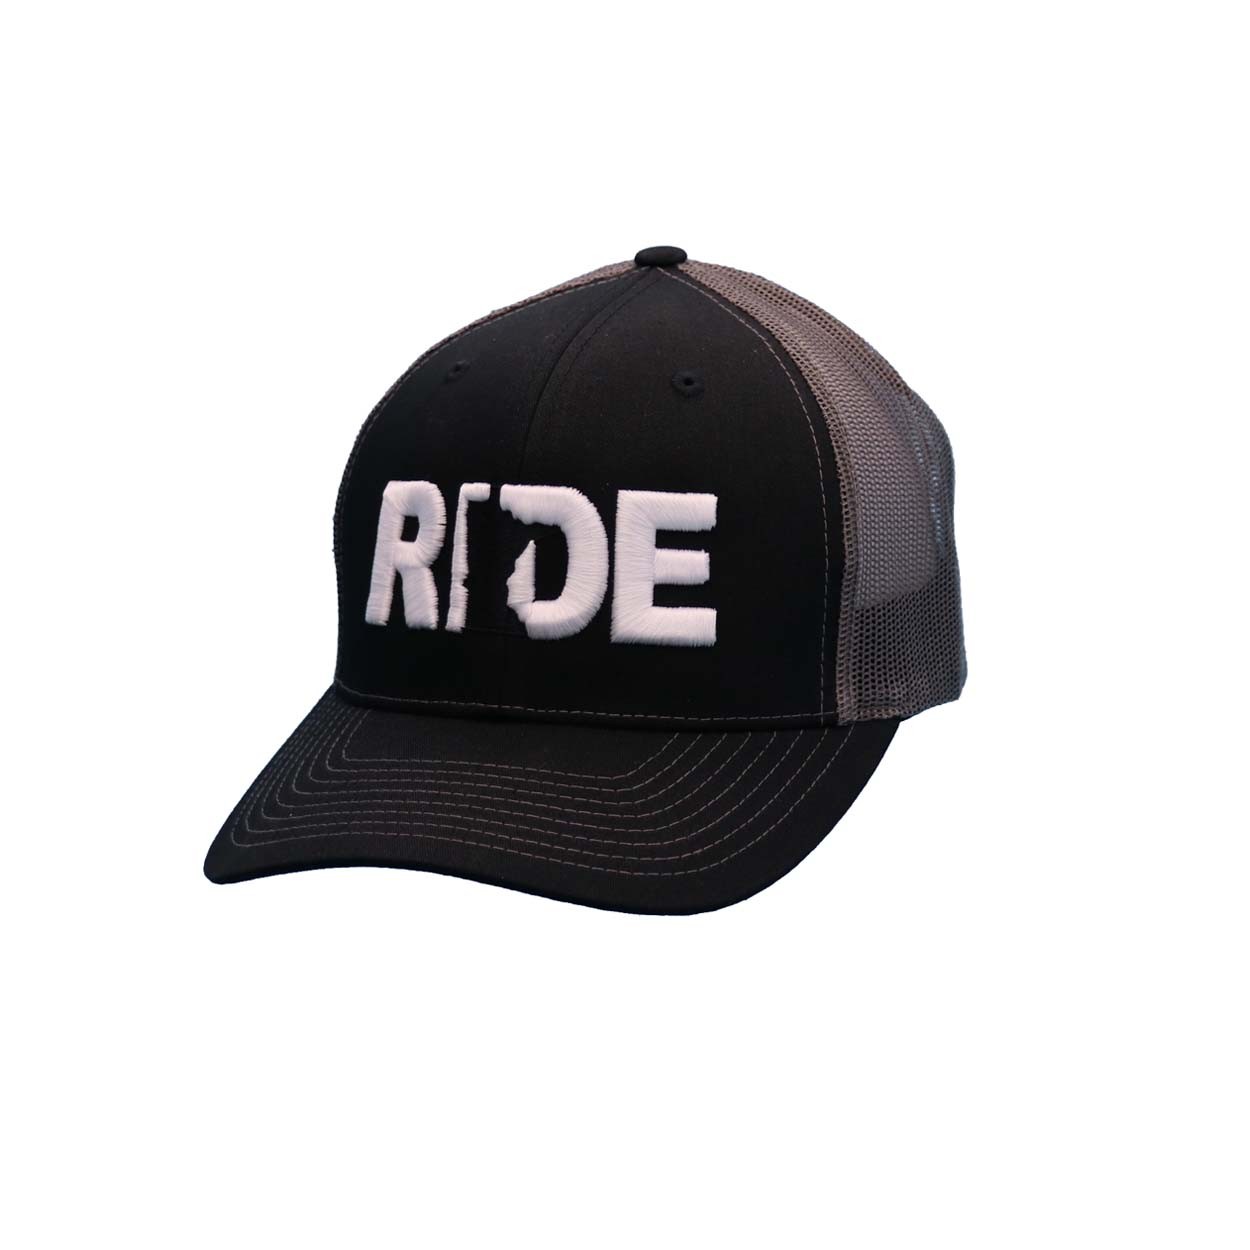 Ride Minnesota Classic Embroidered Snapback Trucker Hat Black/Dark Gray